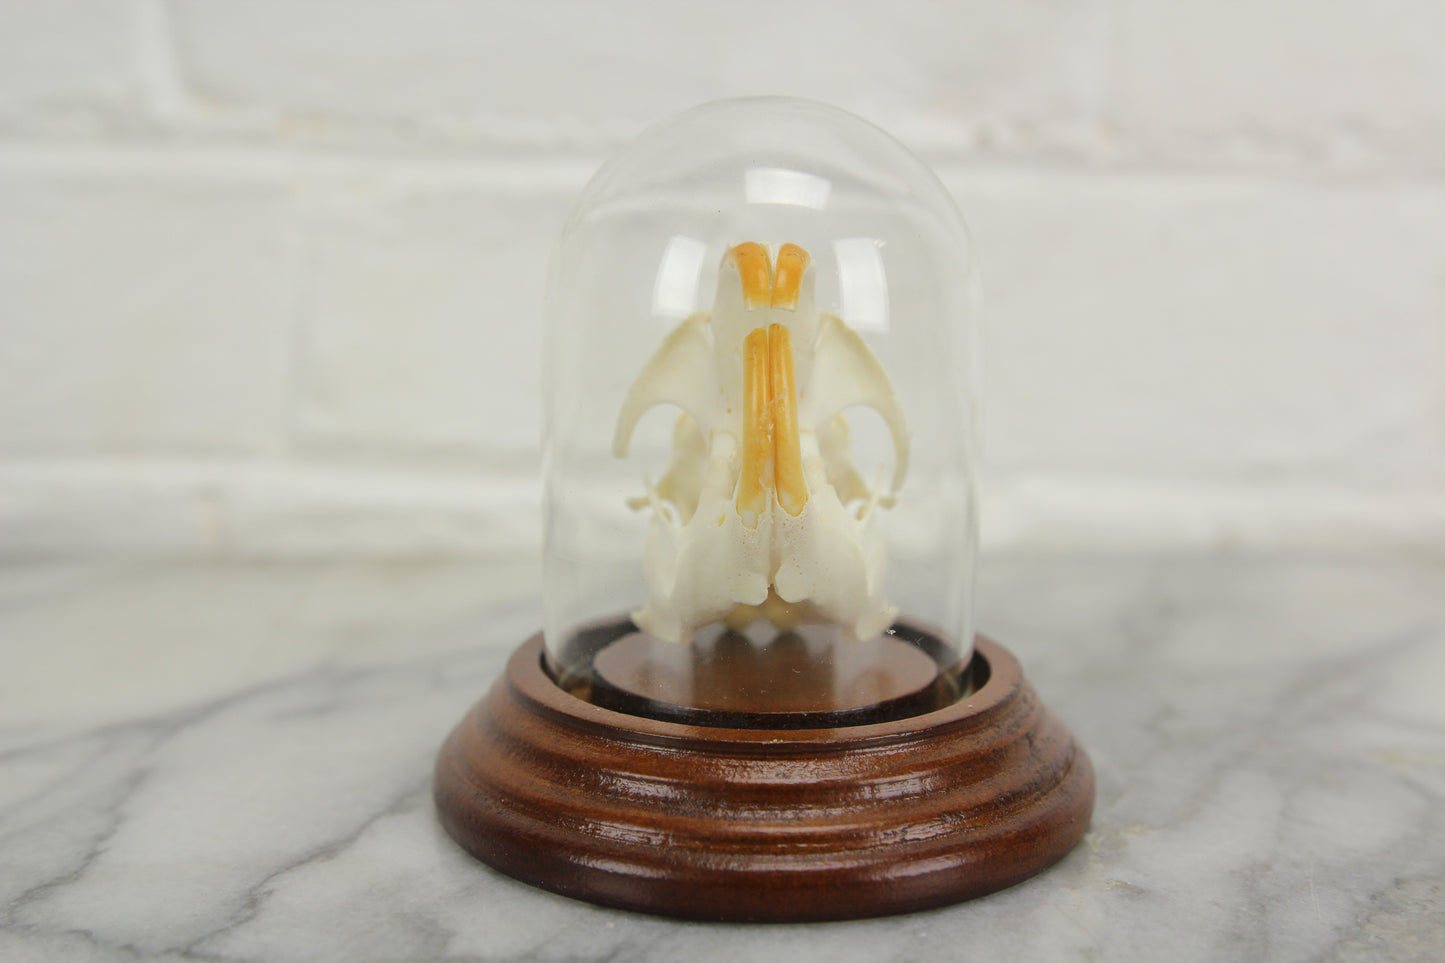 European Taxidermy Muskrat Skull in a Victorian Style Cloche Dome